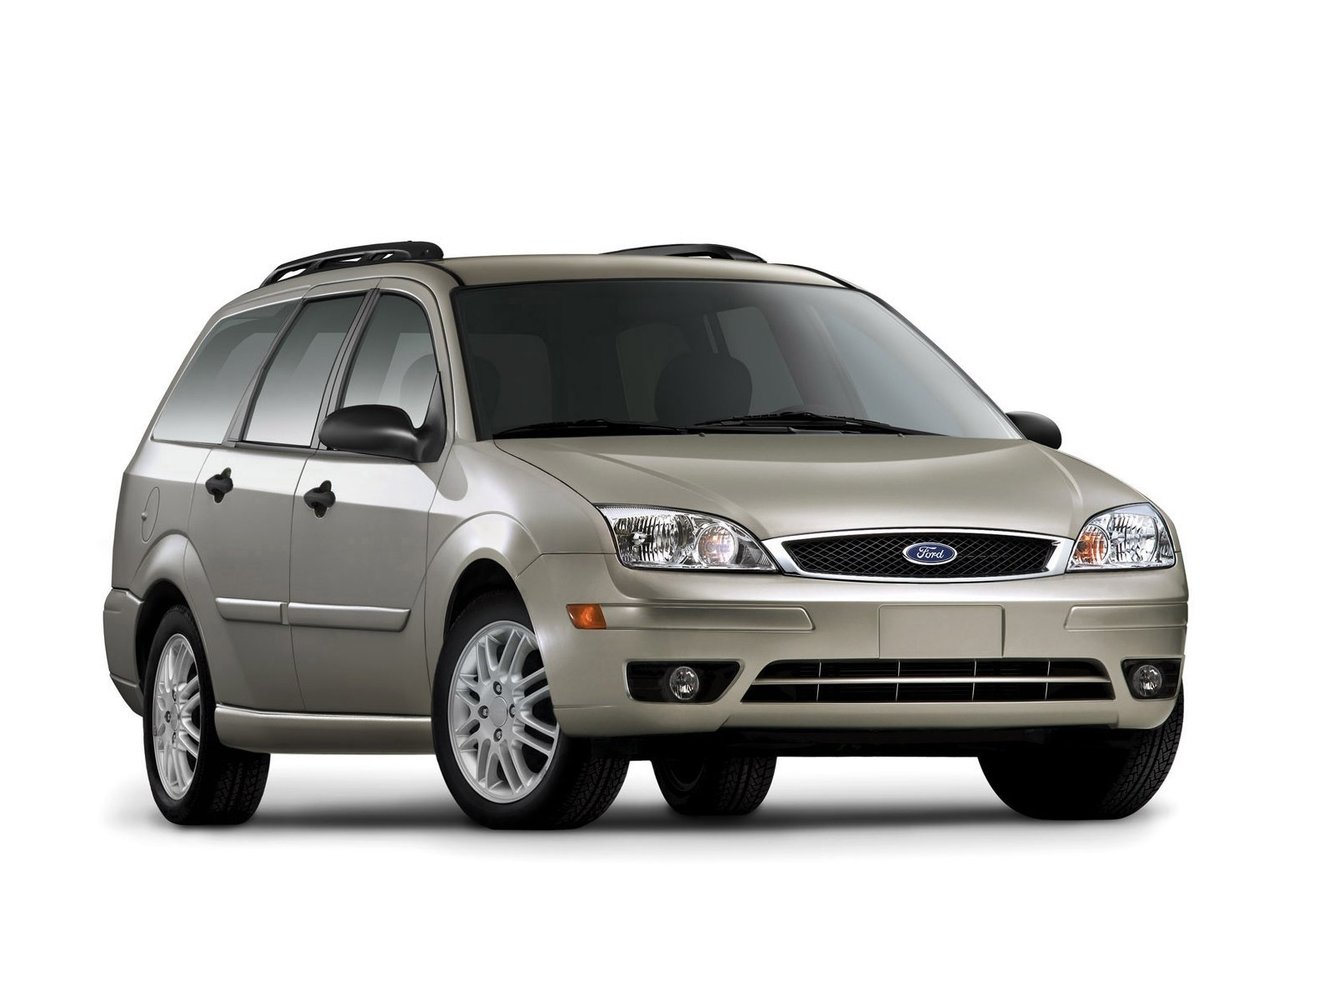 Ford Focus (North America) 2005 - 2007